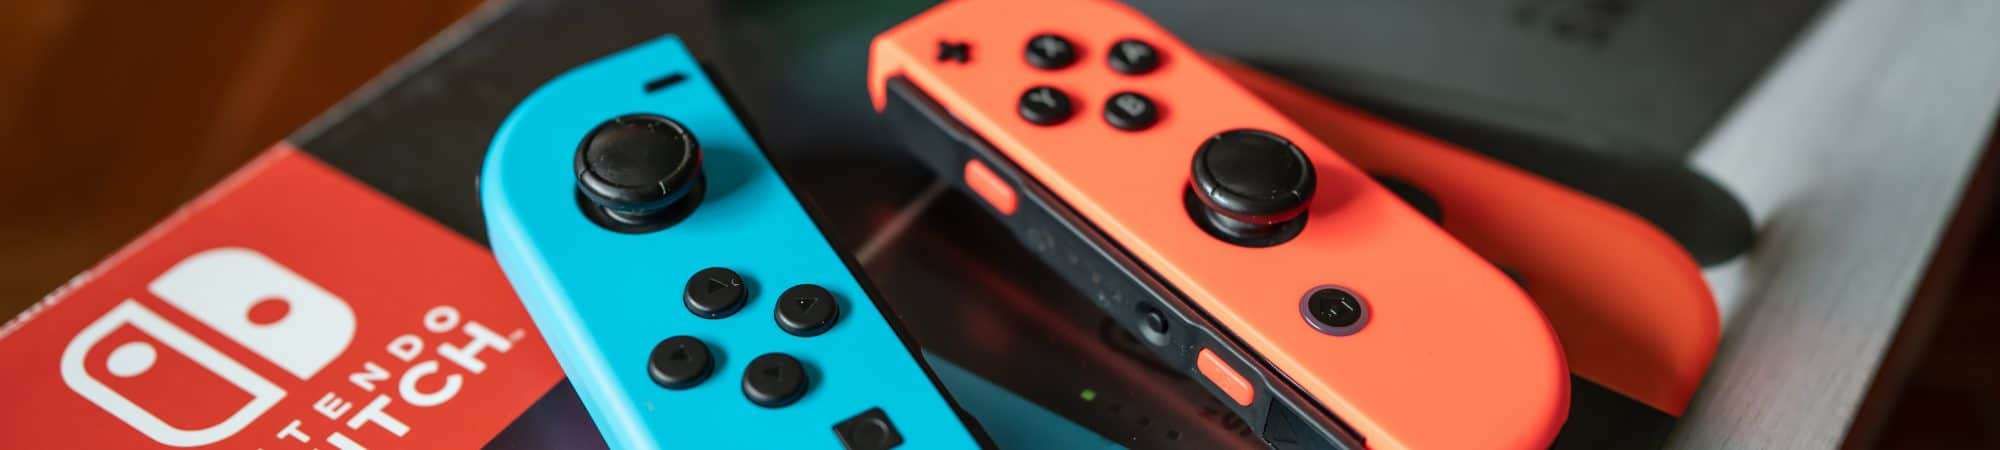 Nintendo Switch. Imagem: Wachiwit / Shutterstock.com